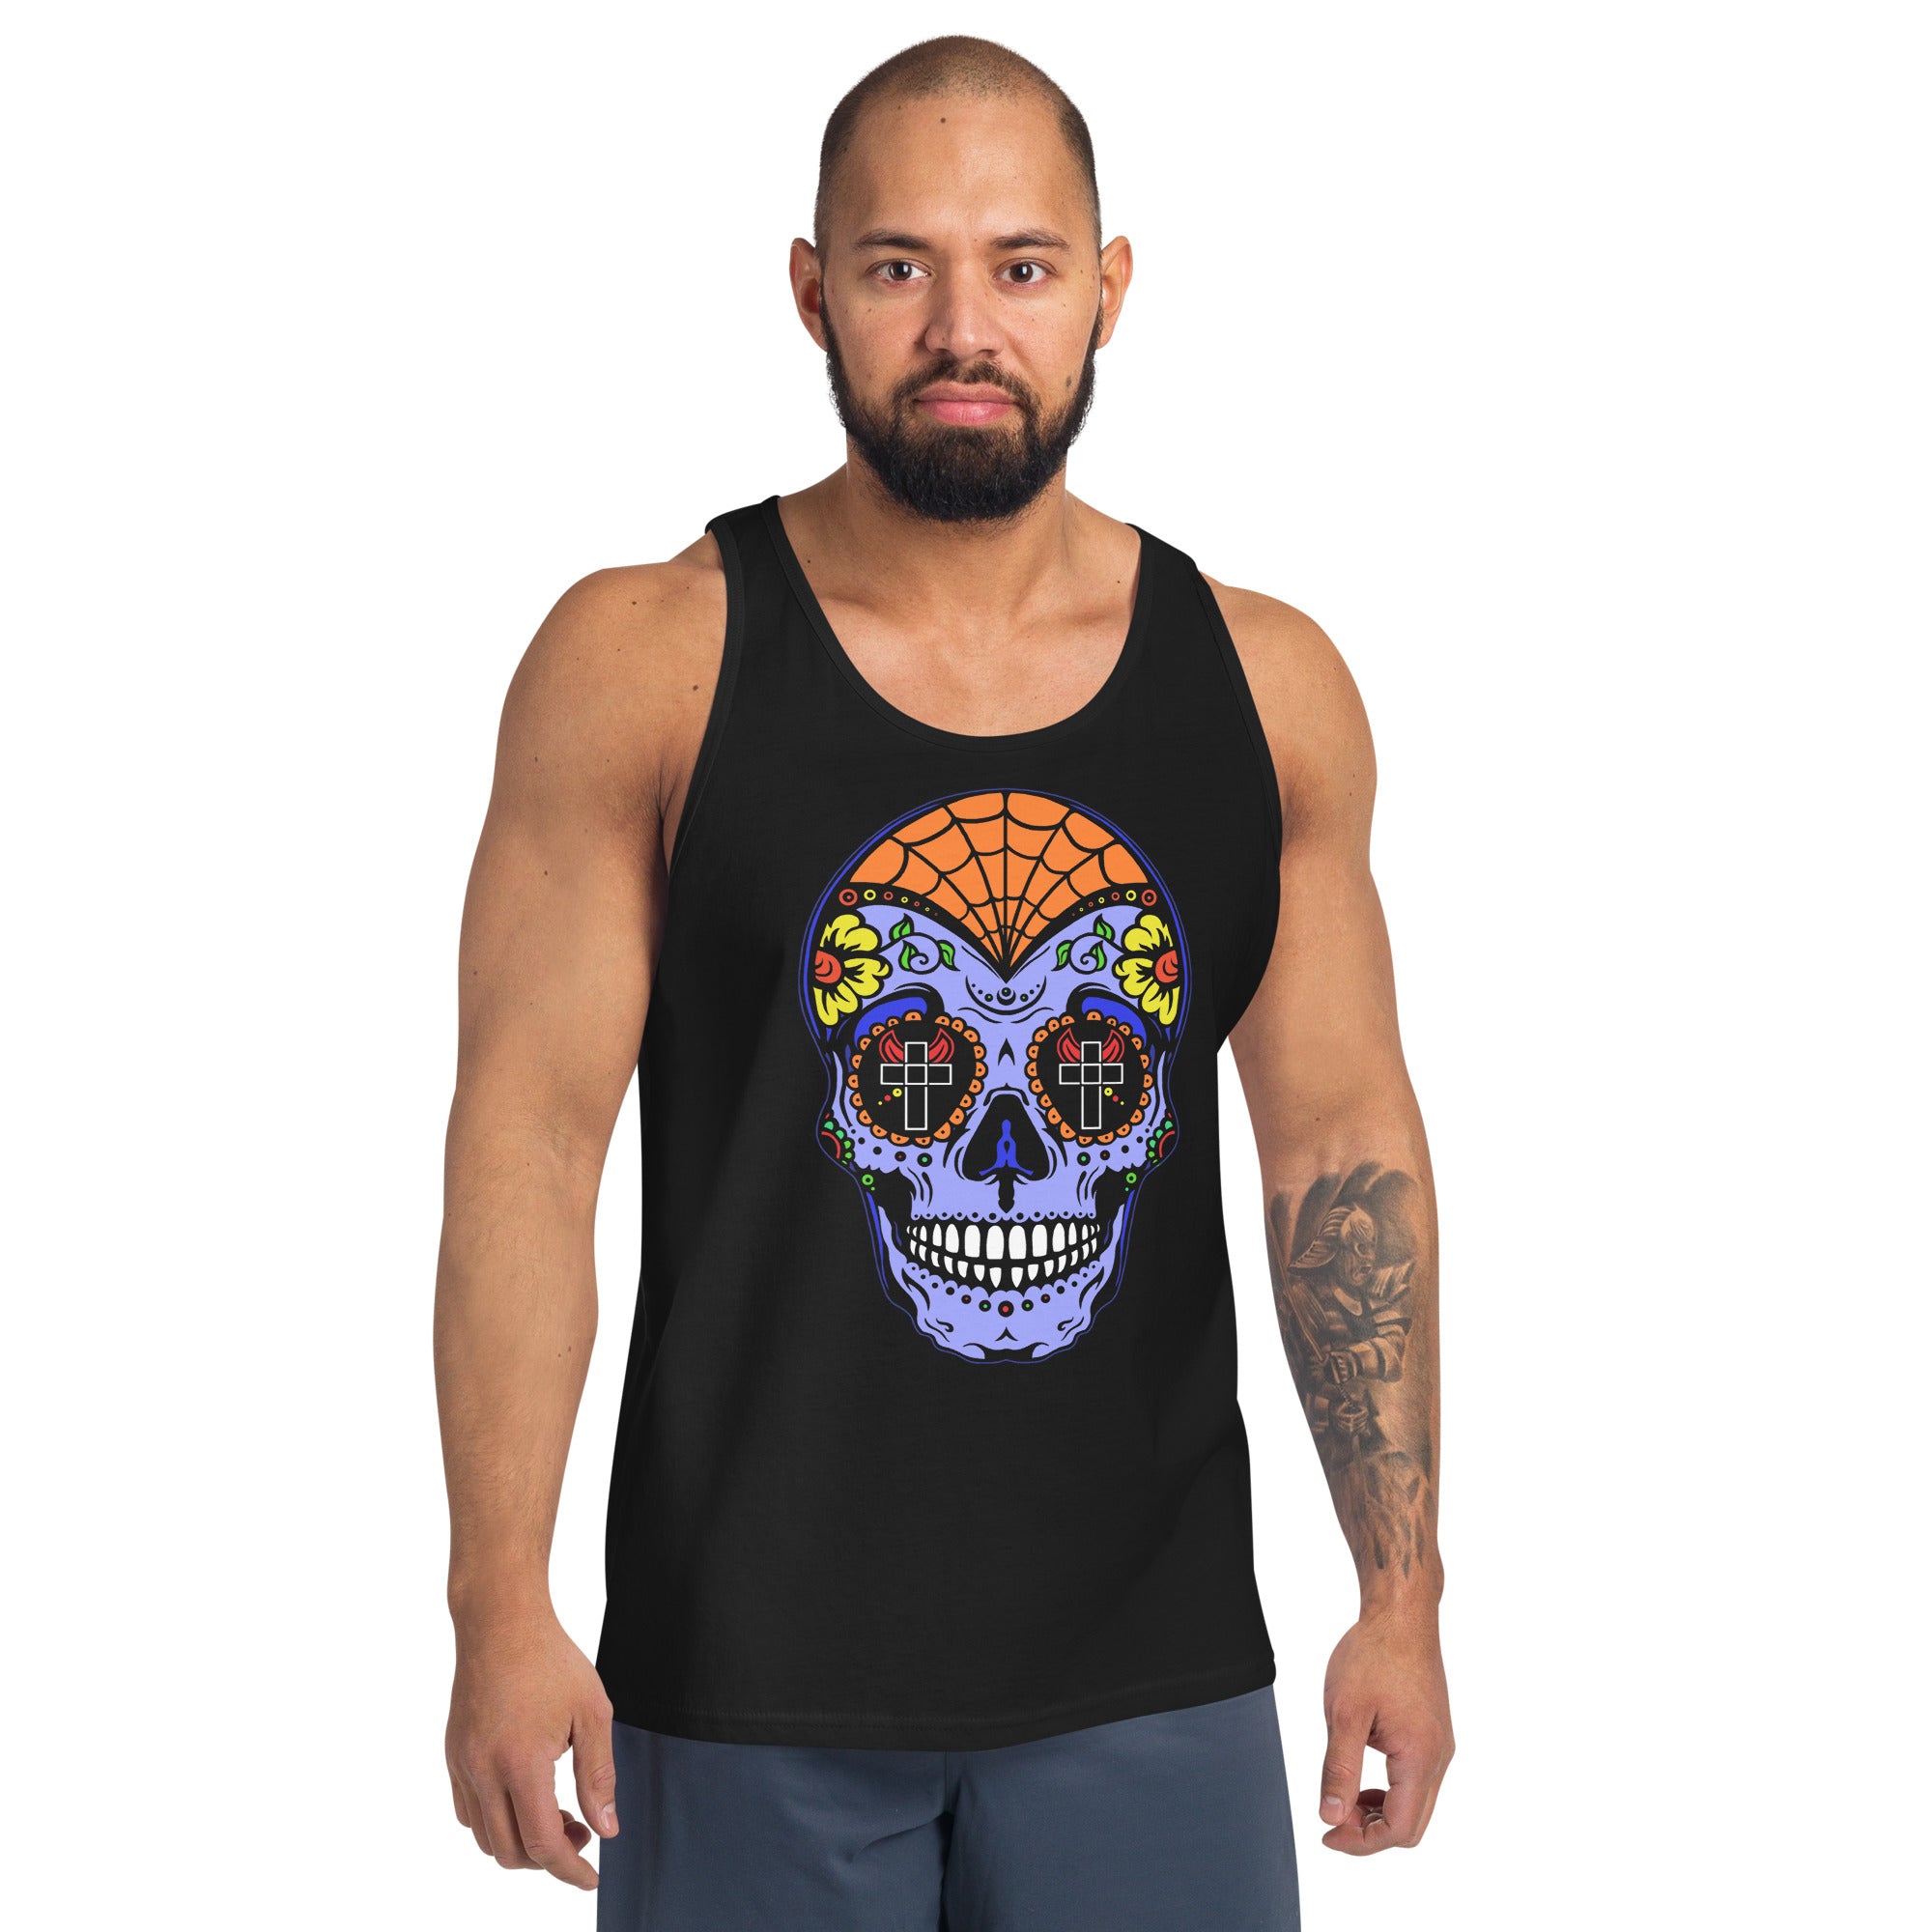 Blue Sugar Skull Day of the Dead Halloween Men's Tank Top Shirt - Edge of Life Designs